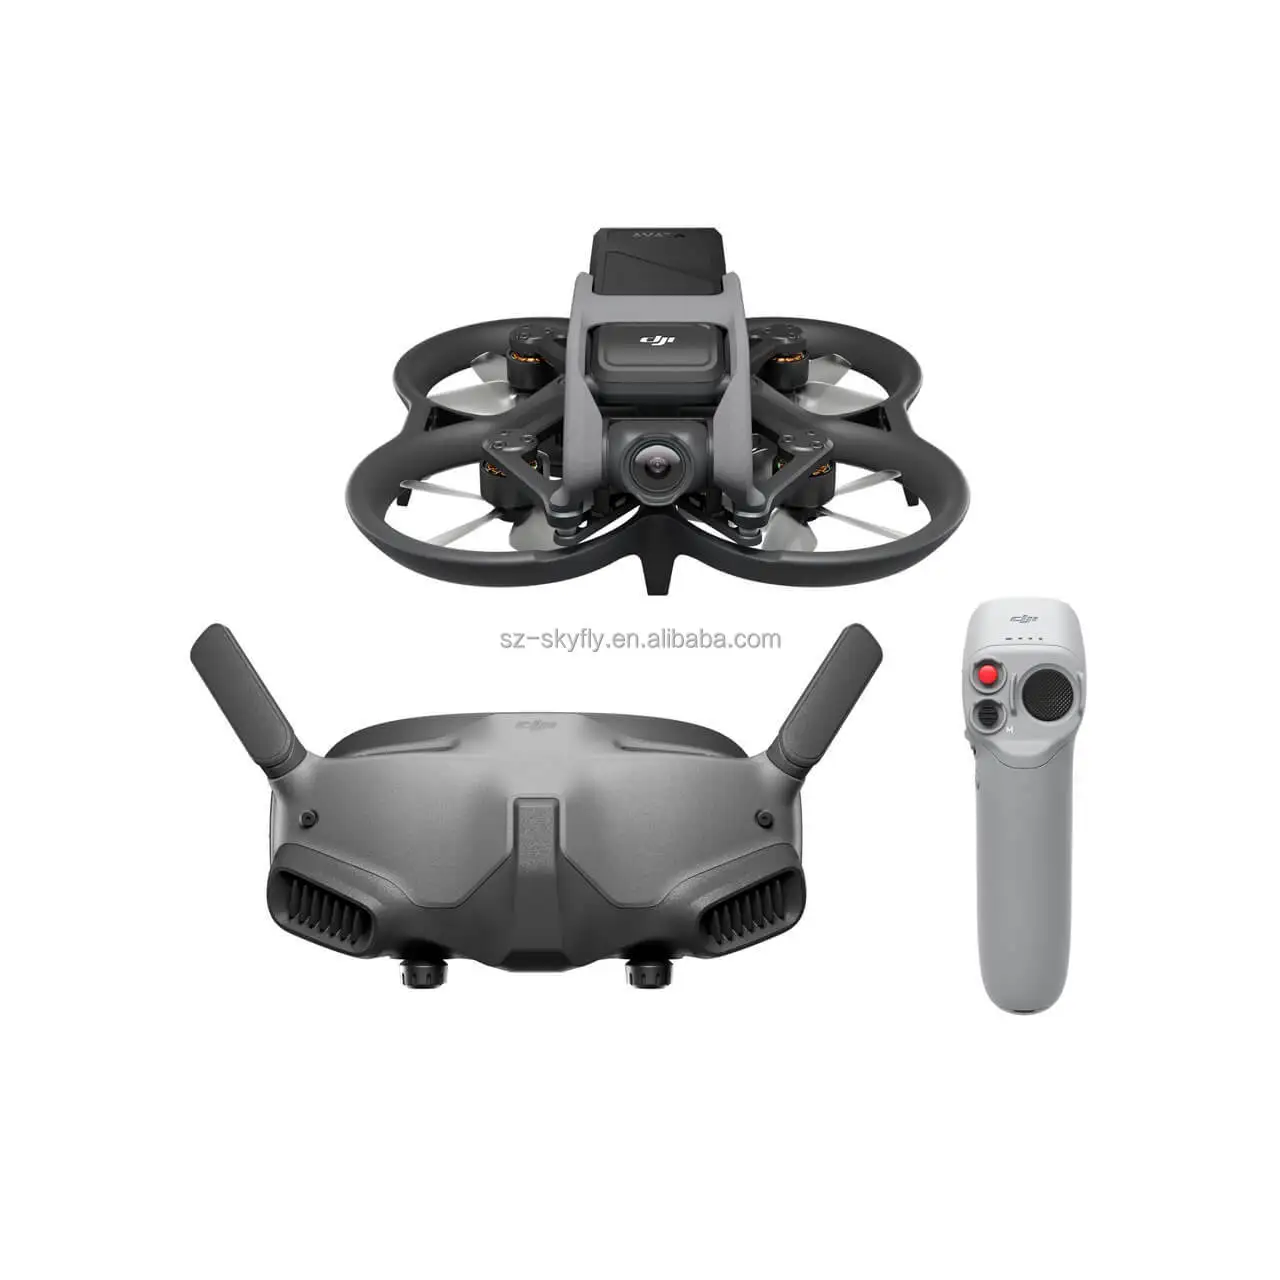 

Original 2022 New Avata immersive flight drone Intuitive motion control 4K/60fps videos 10 km 1080p 410g portable drone